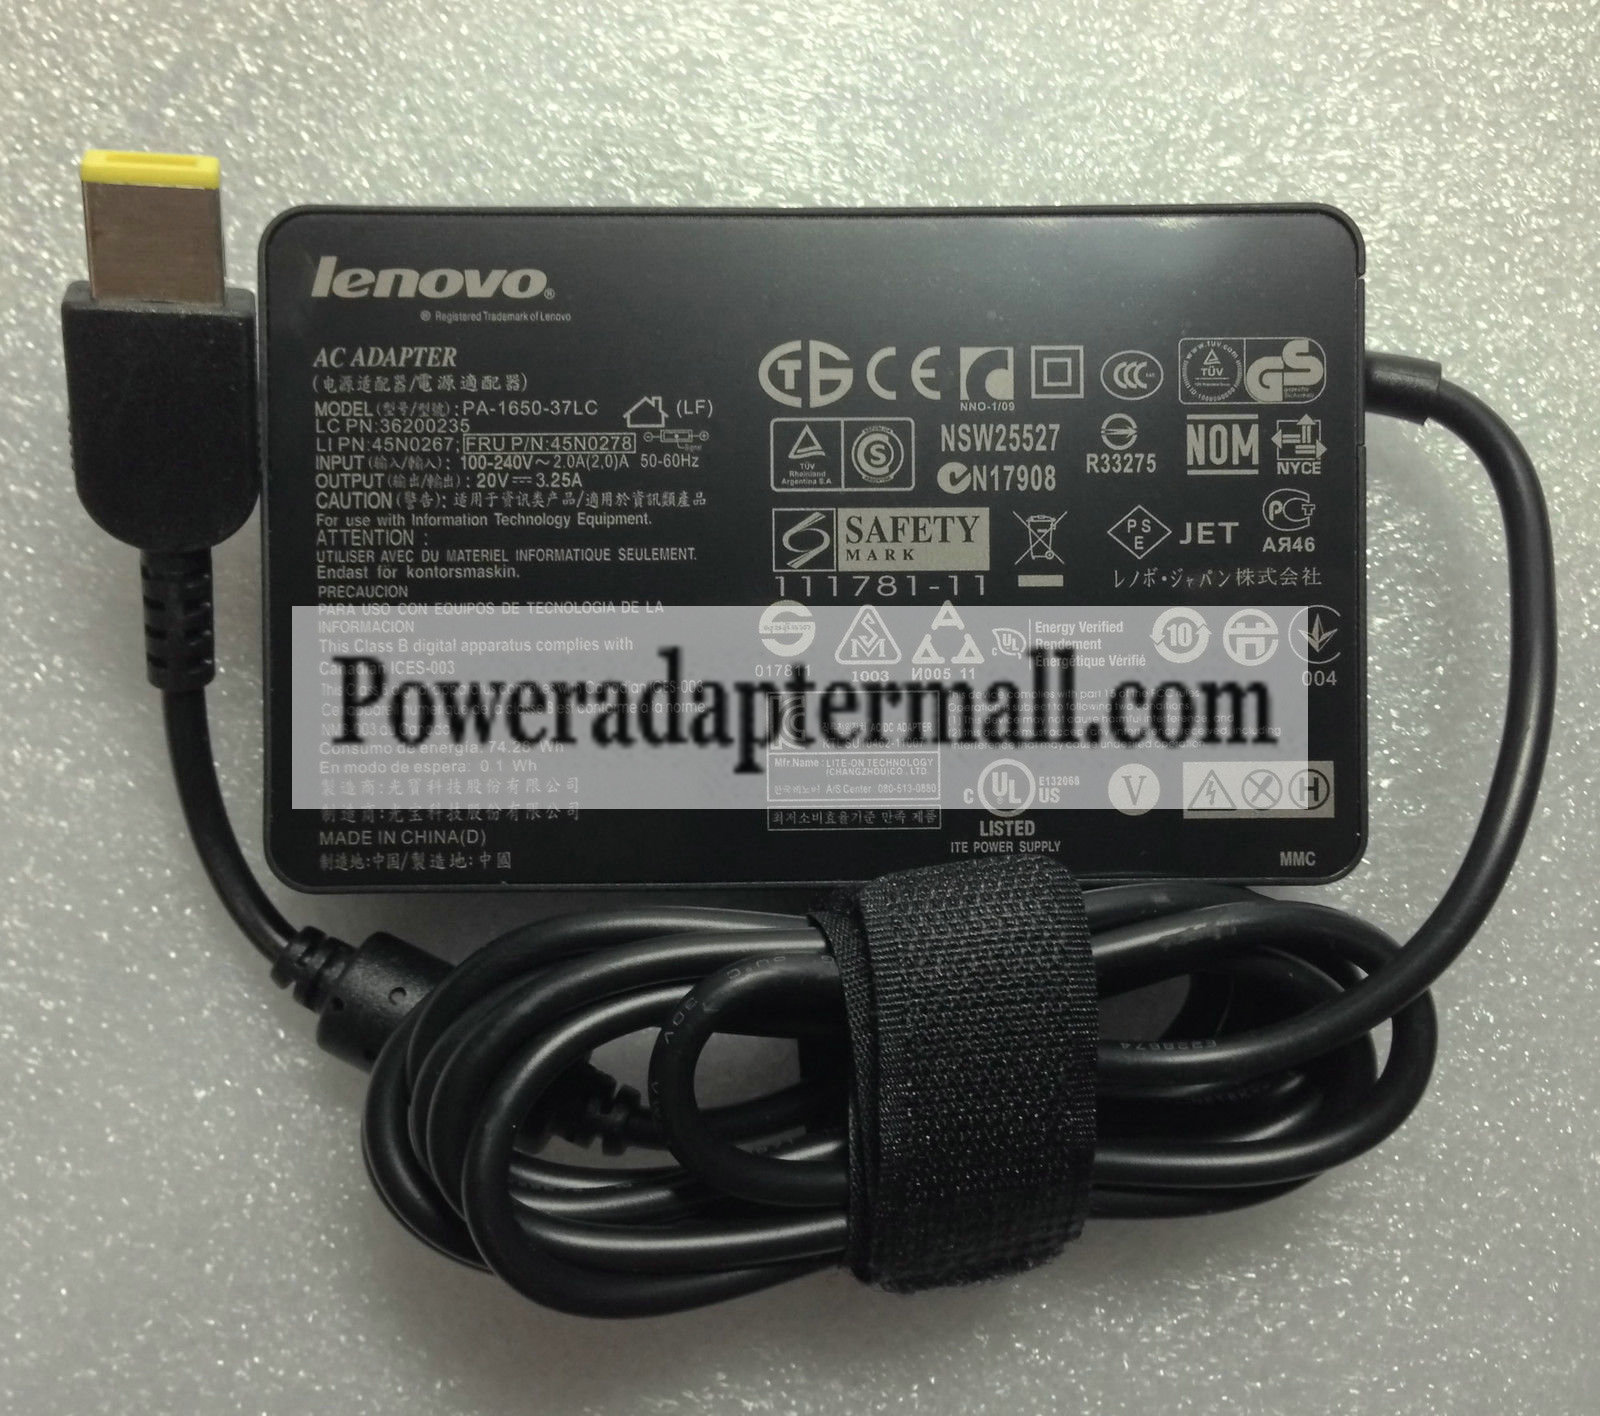 Lenovo 45N0278 Yoga 13 59366347 20V 3.25A AC Power Adapter